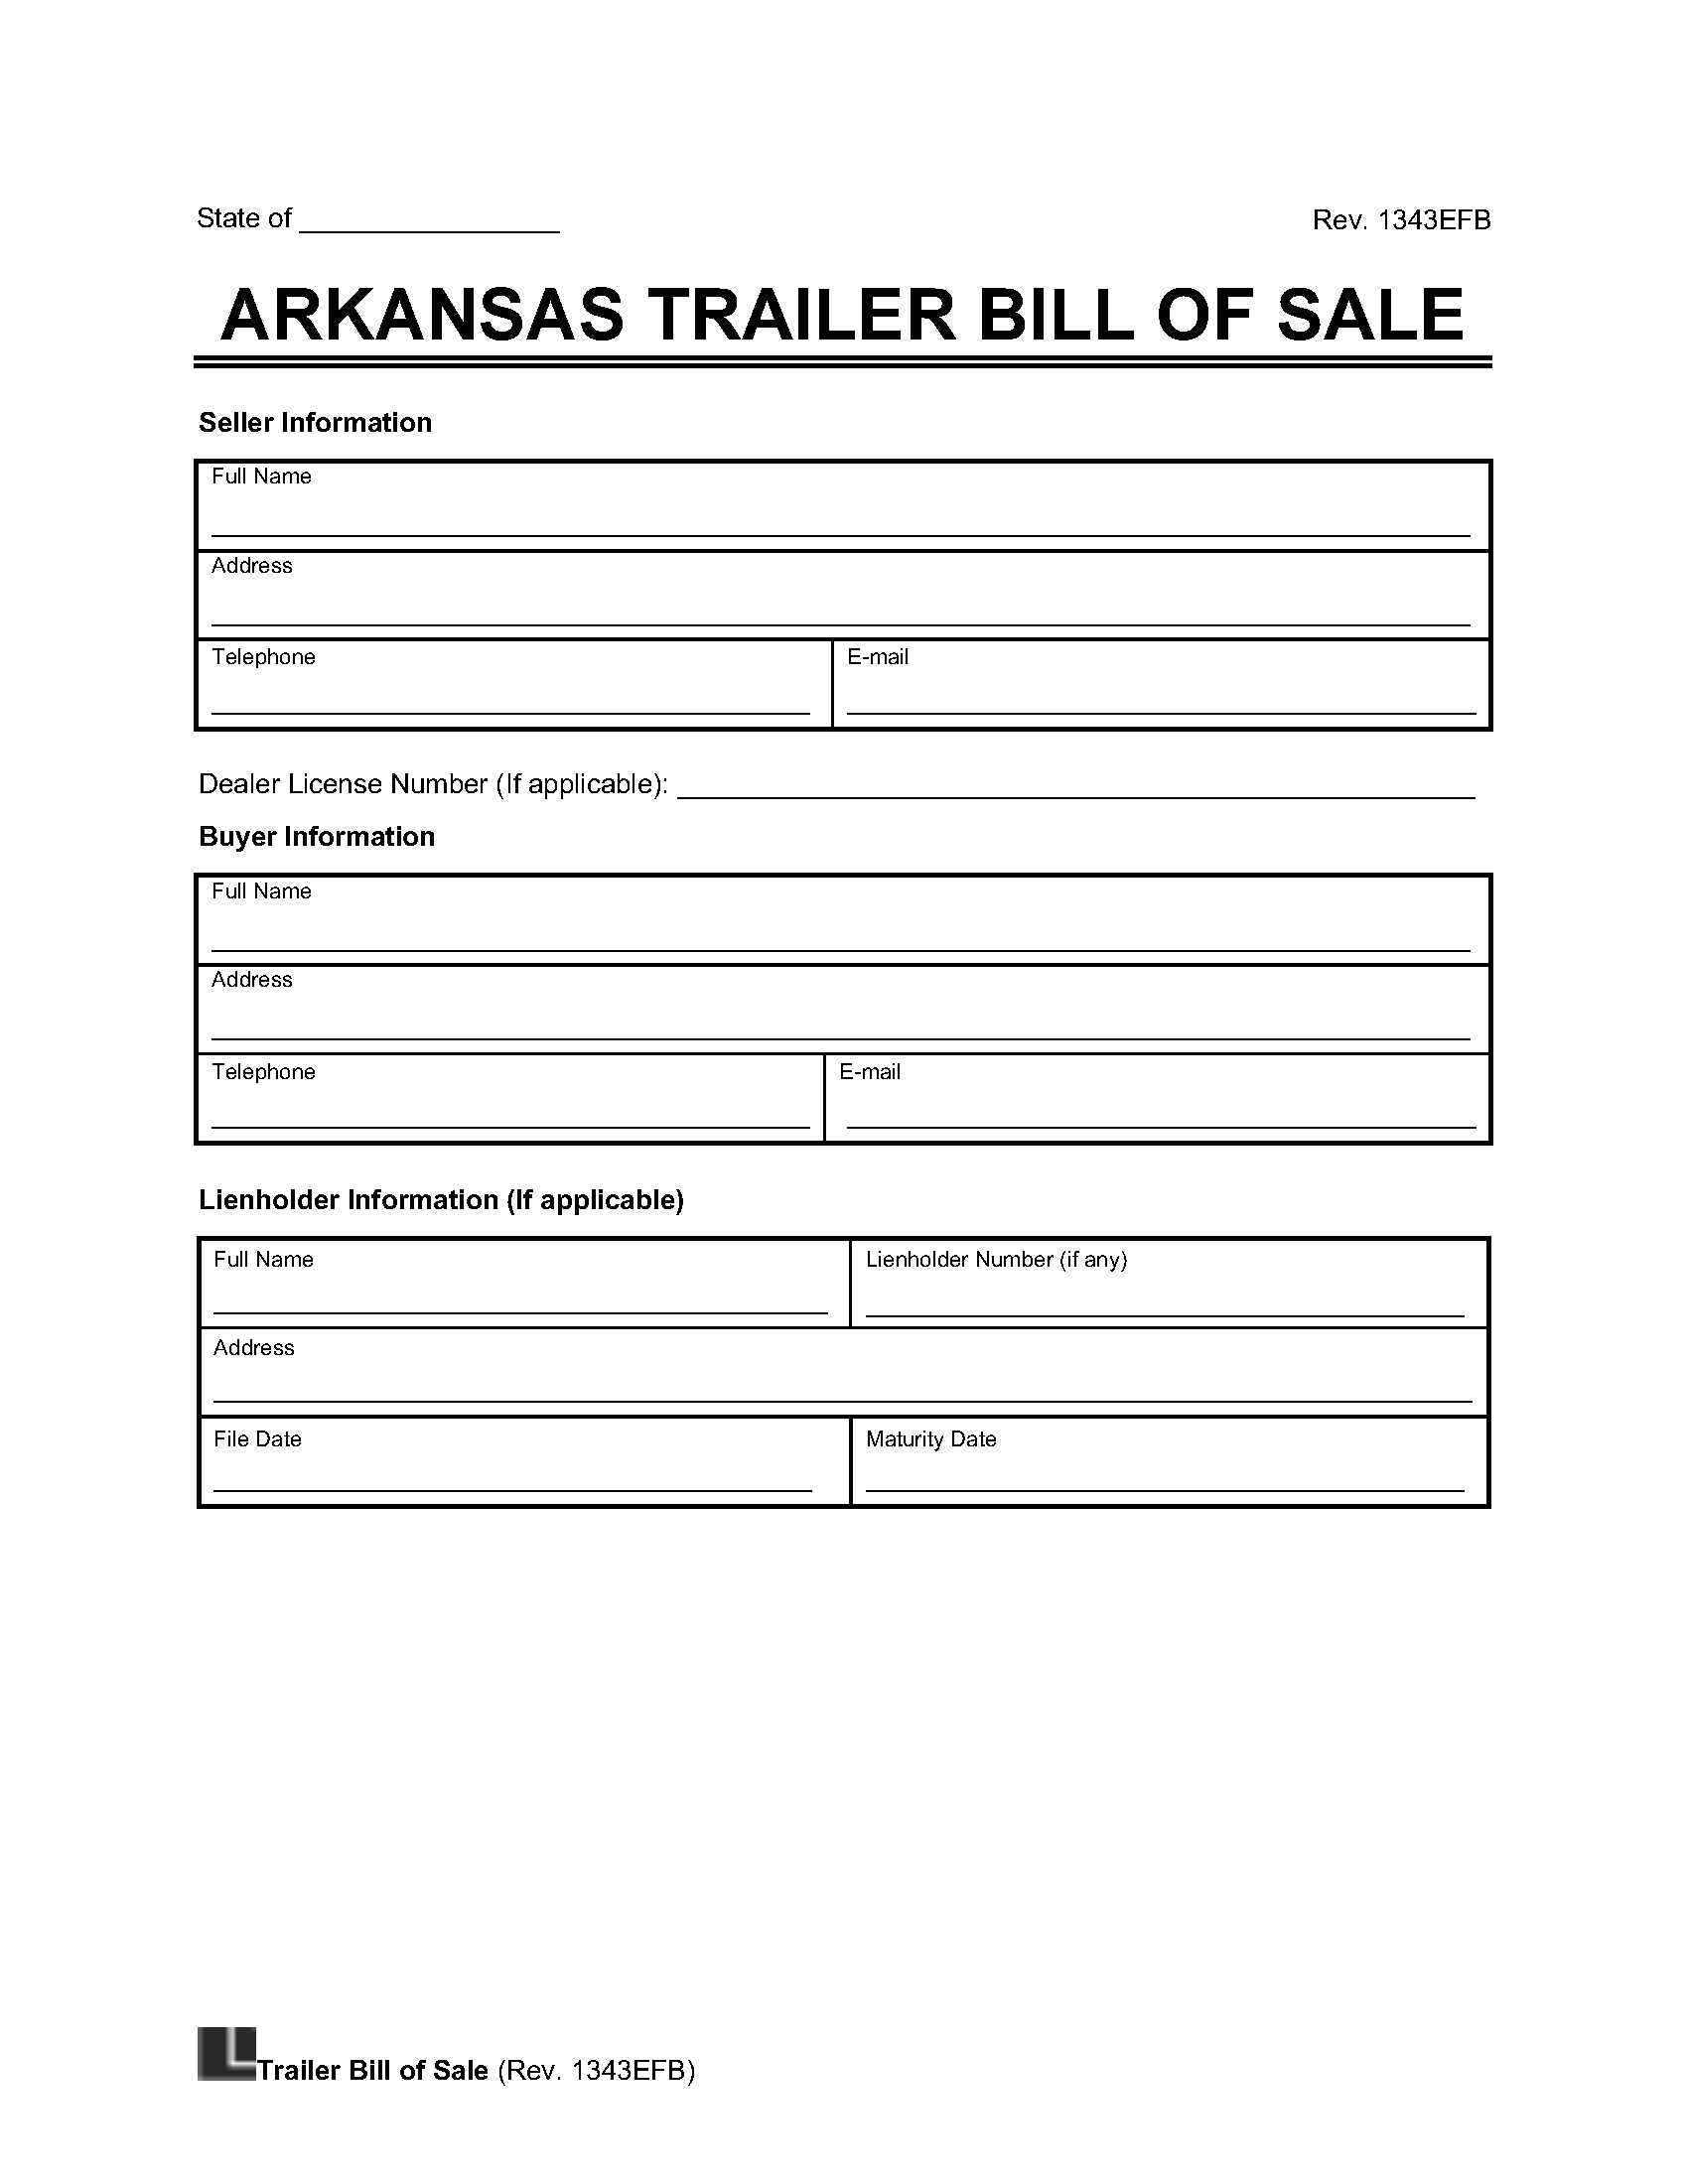 Arkansas Trailer Bill of Sale screenshot